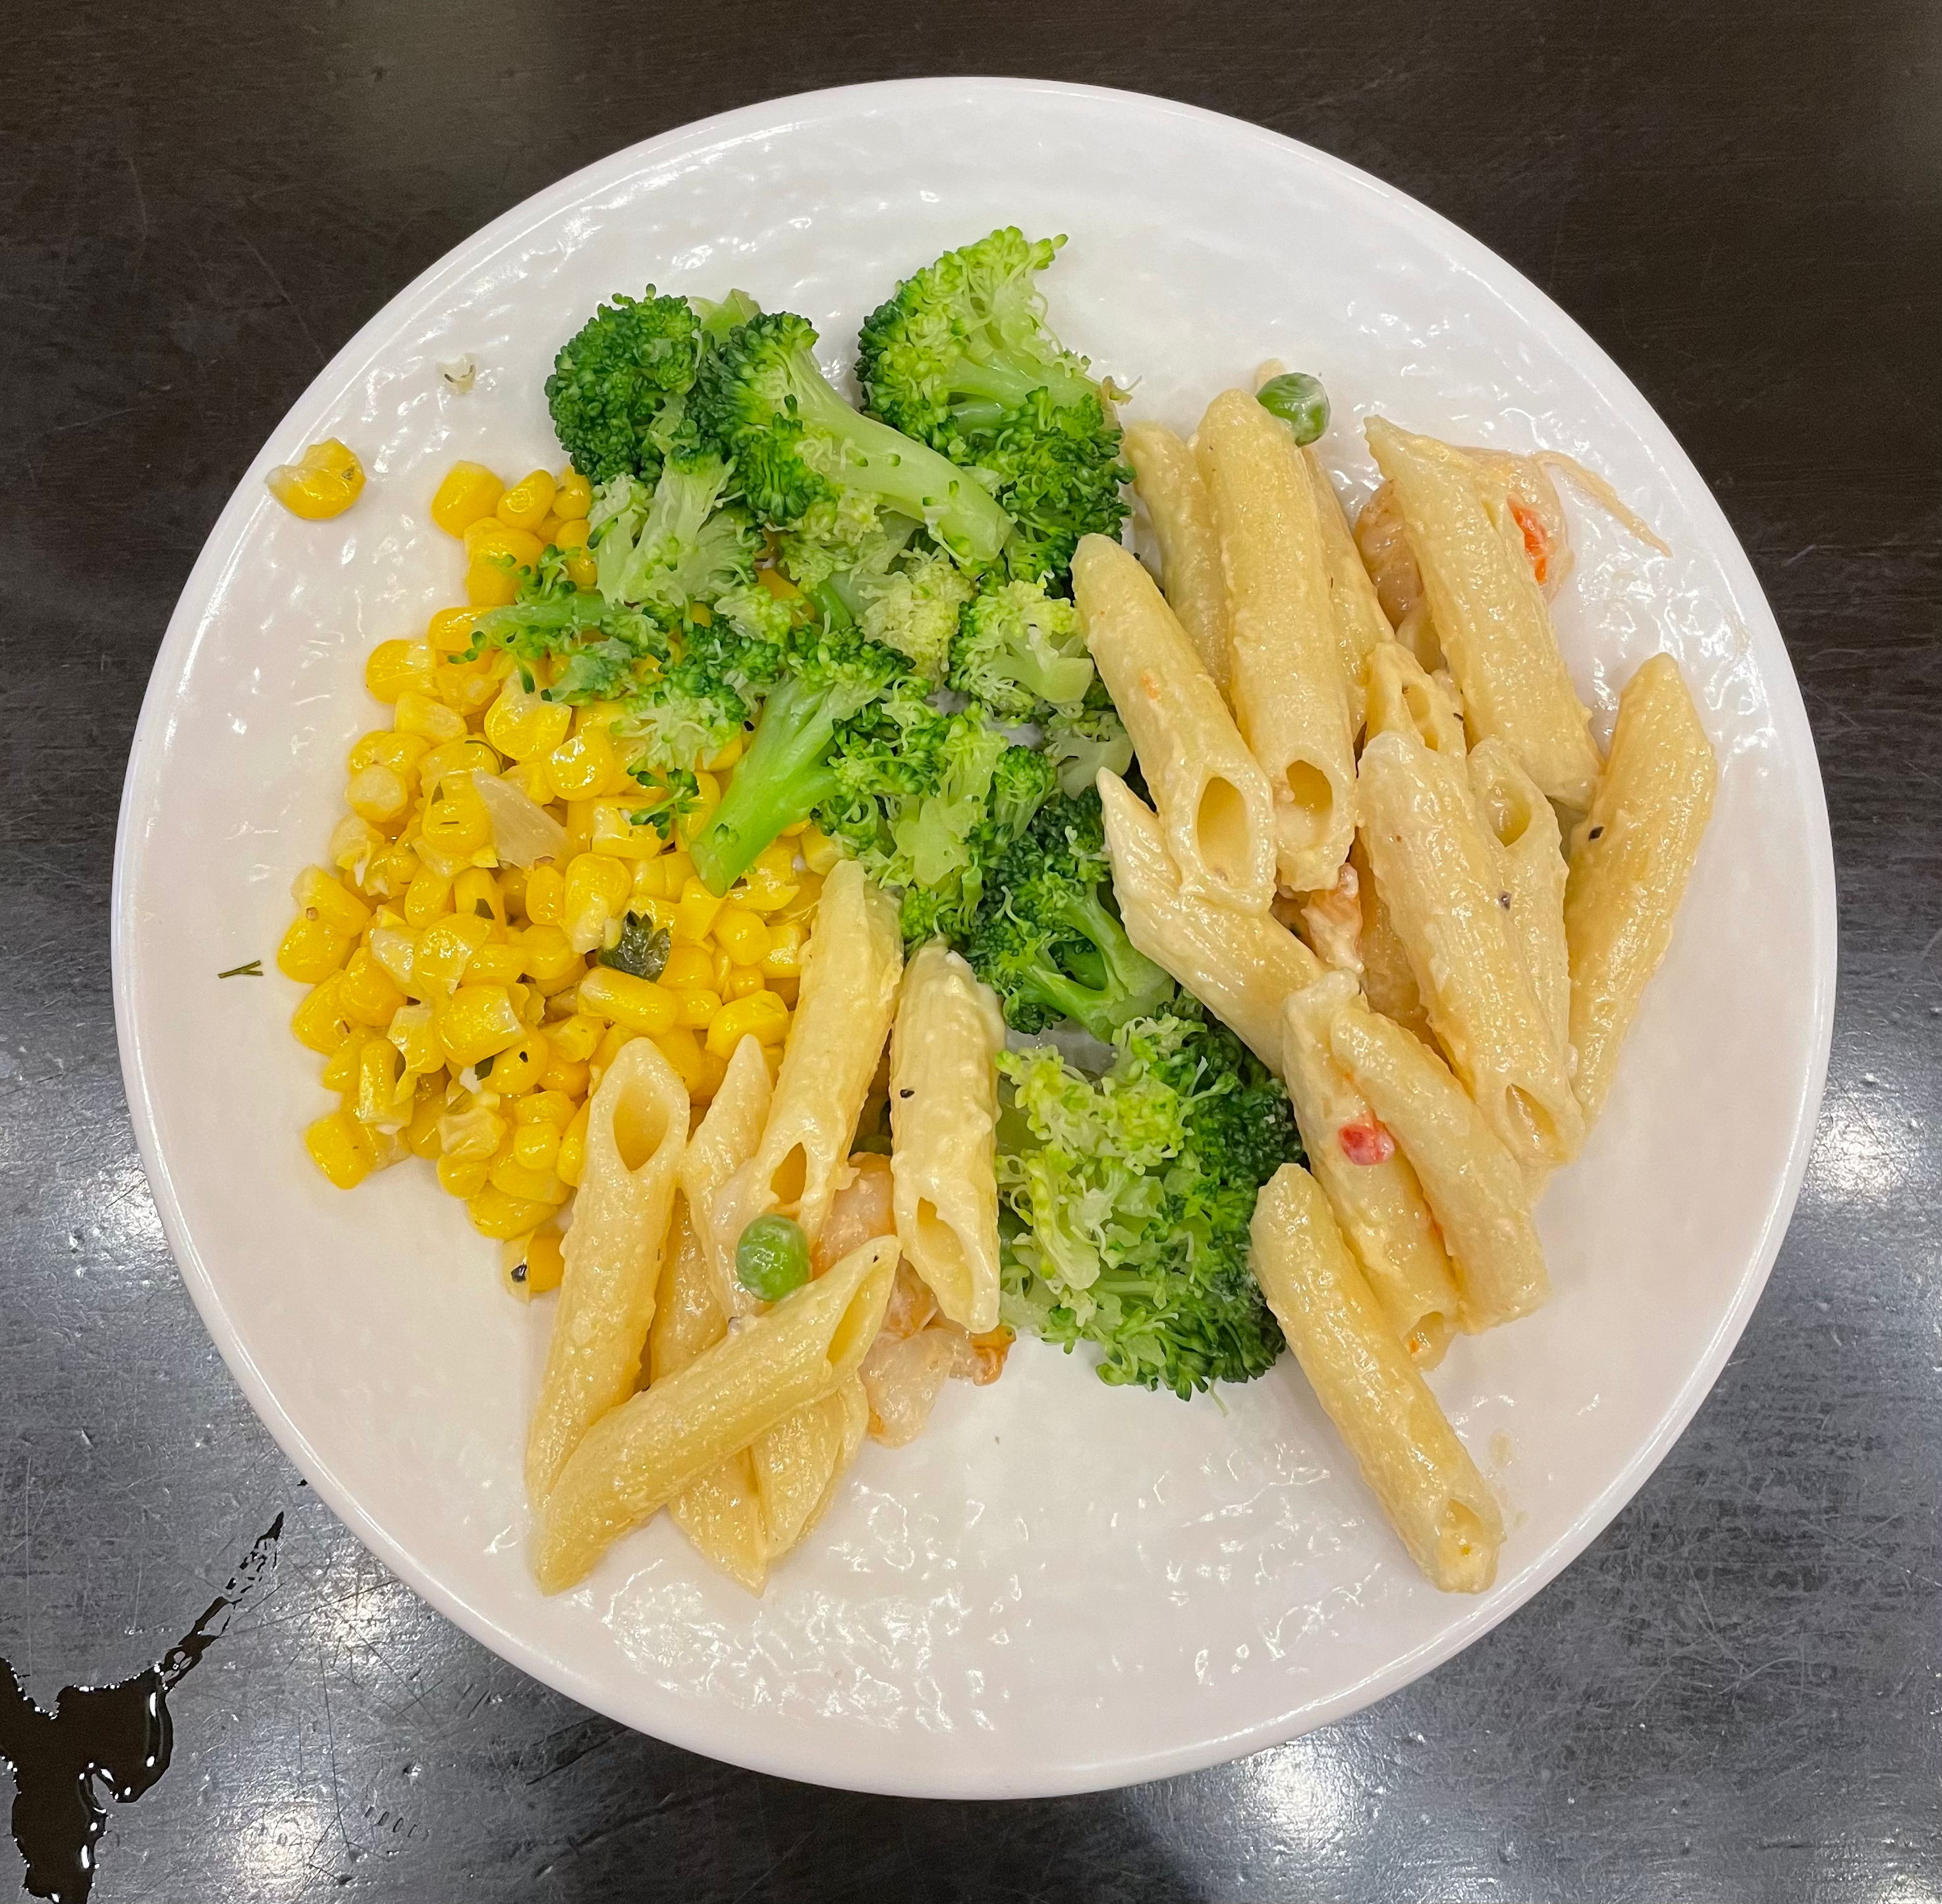 Shrimp pasta, broccoli, and corn